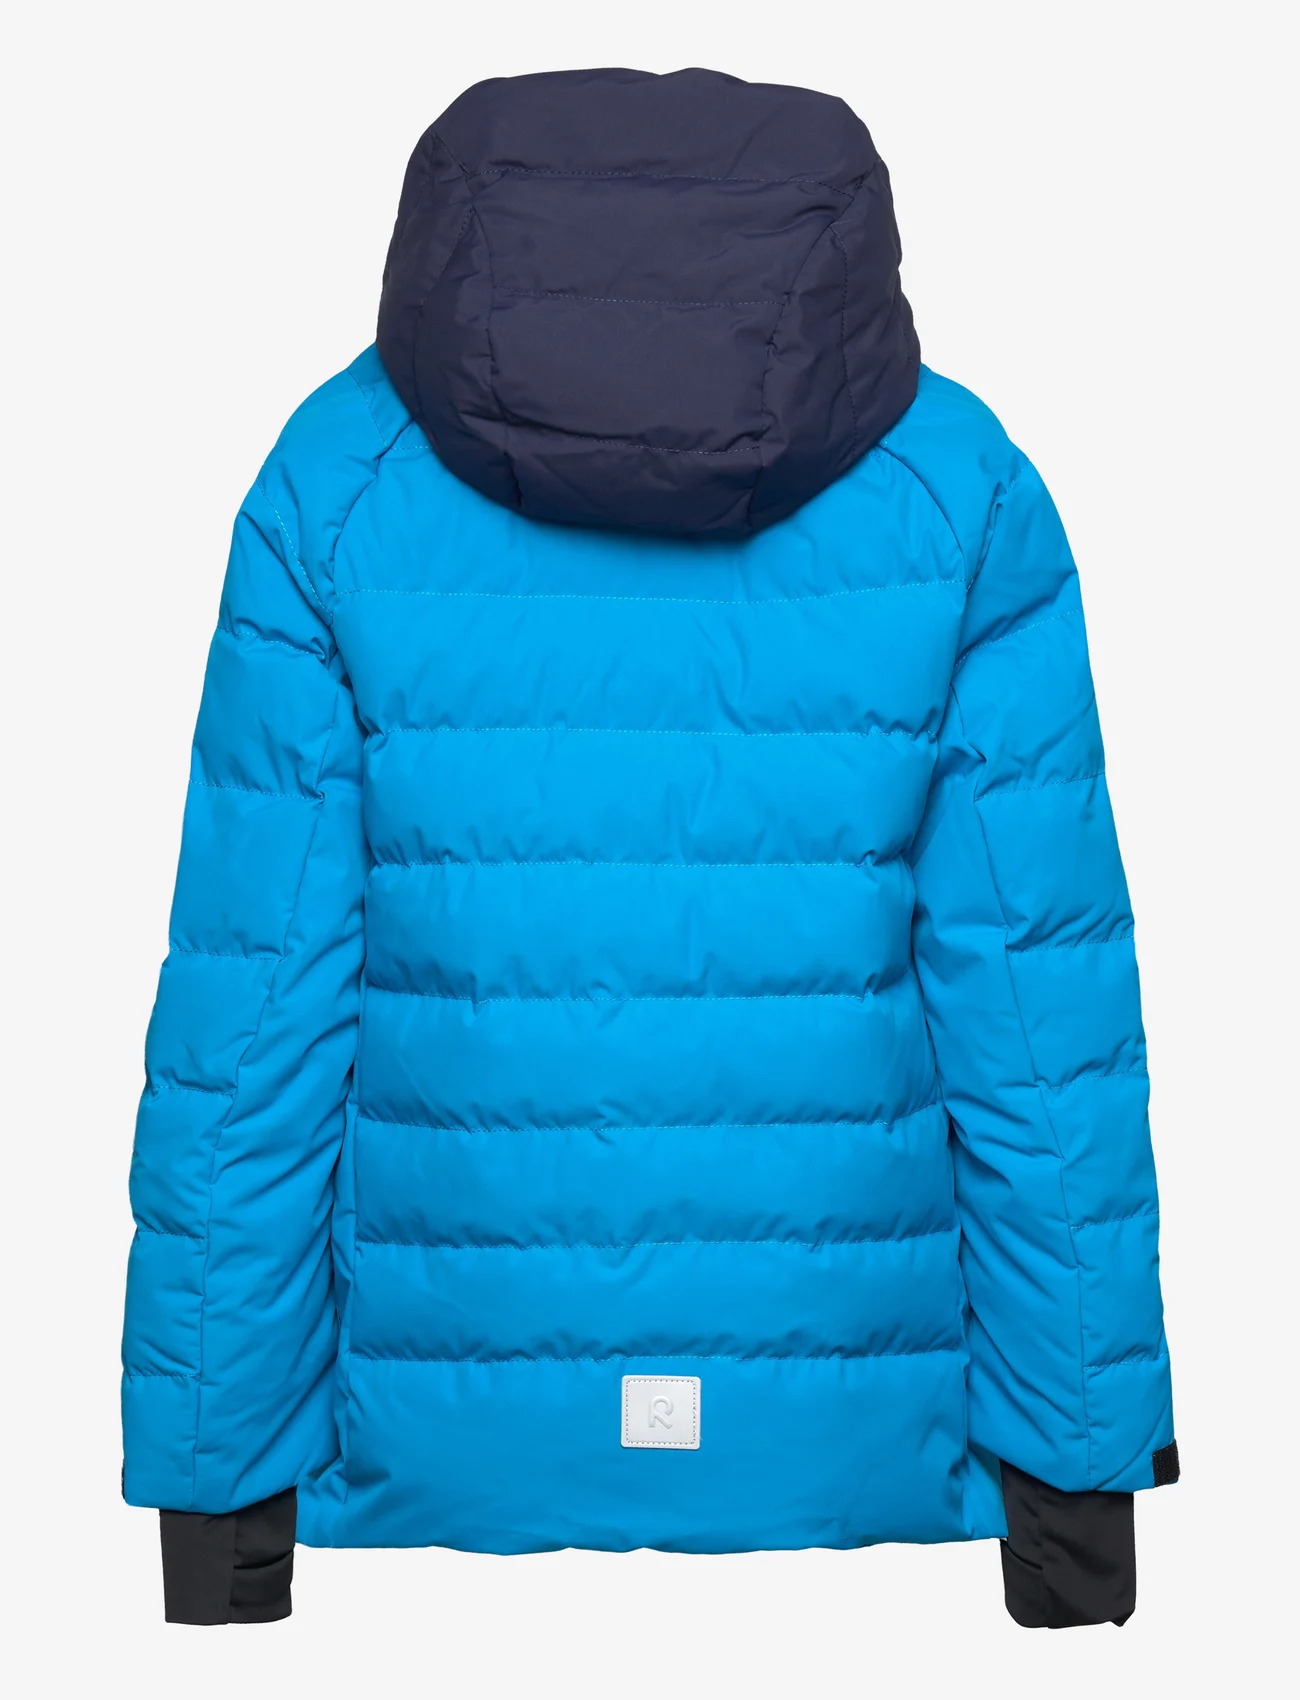 Reima - Juniors' Winter jacket Kuosku - gewatteerde jassen - true blue - 1